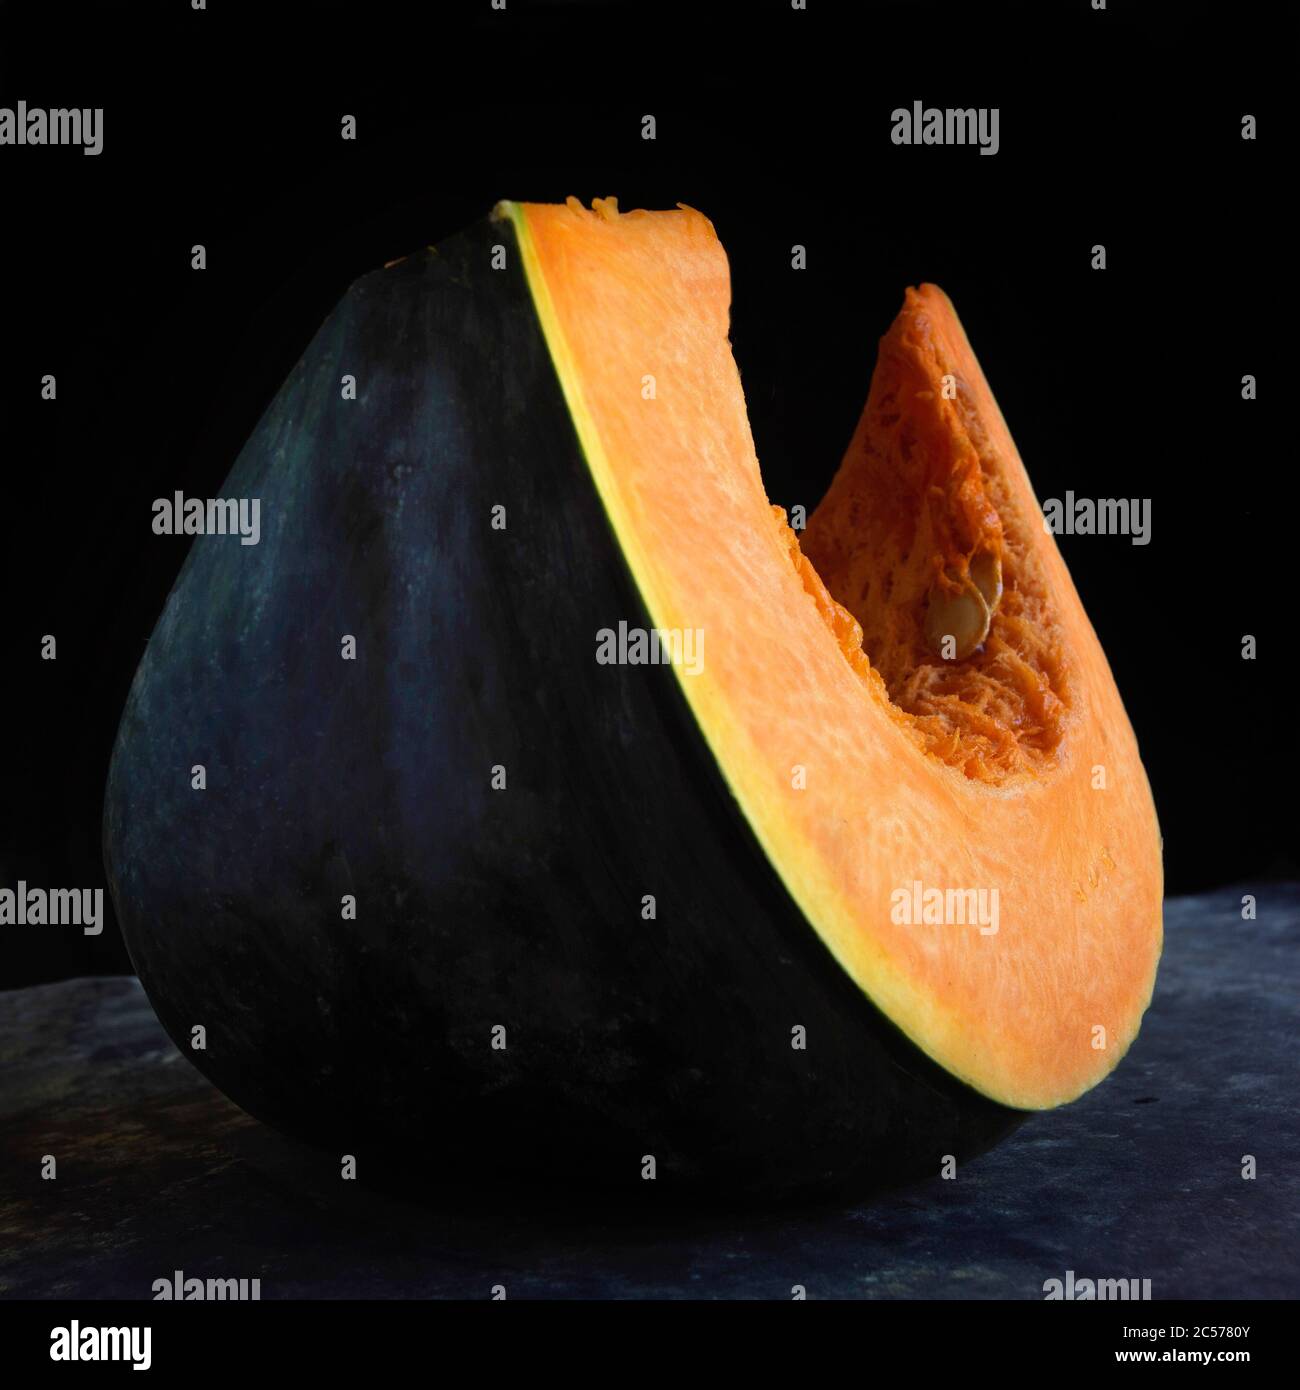 Closeup shot of a sliced pumpkin on a black background Stock Photo